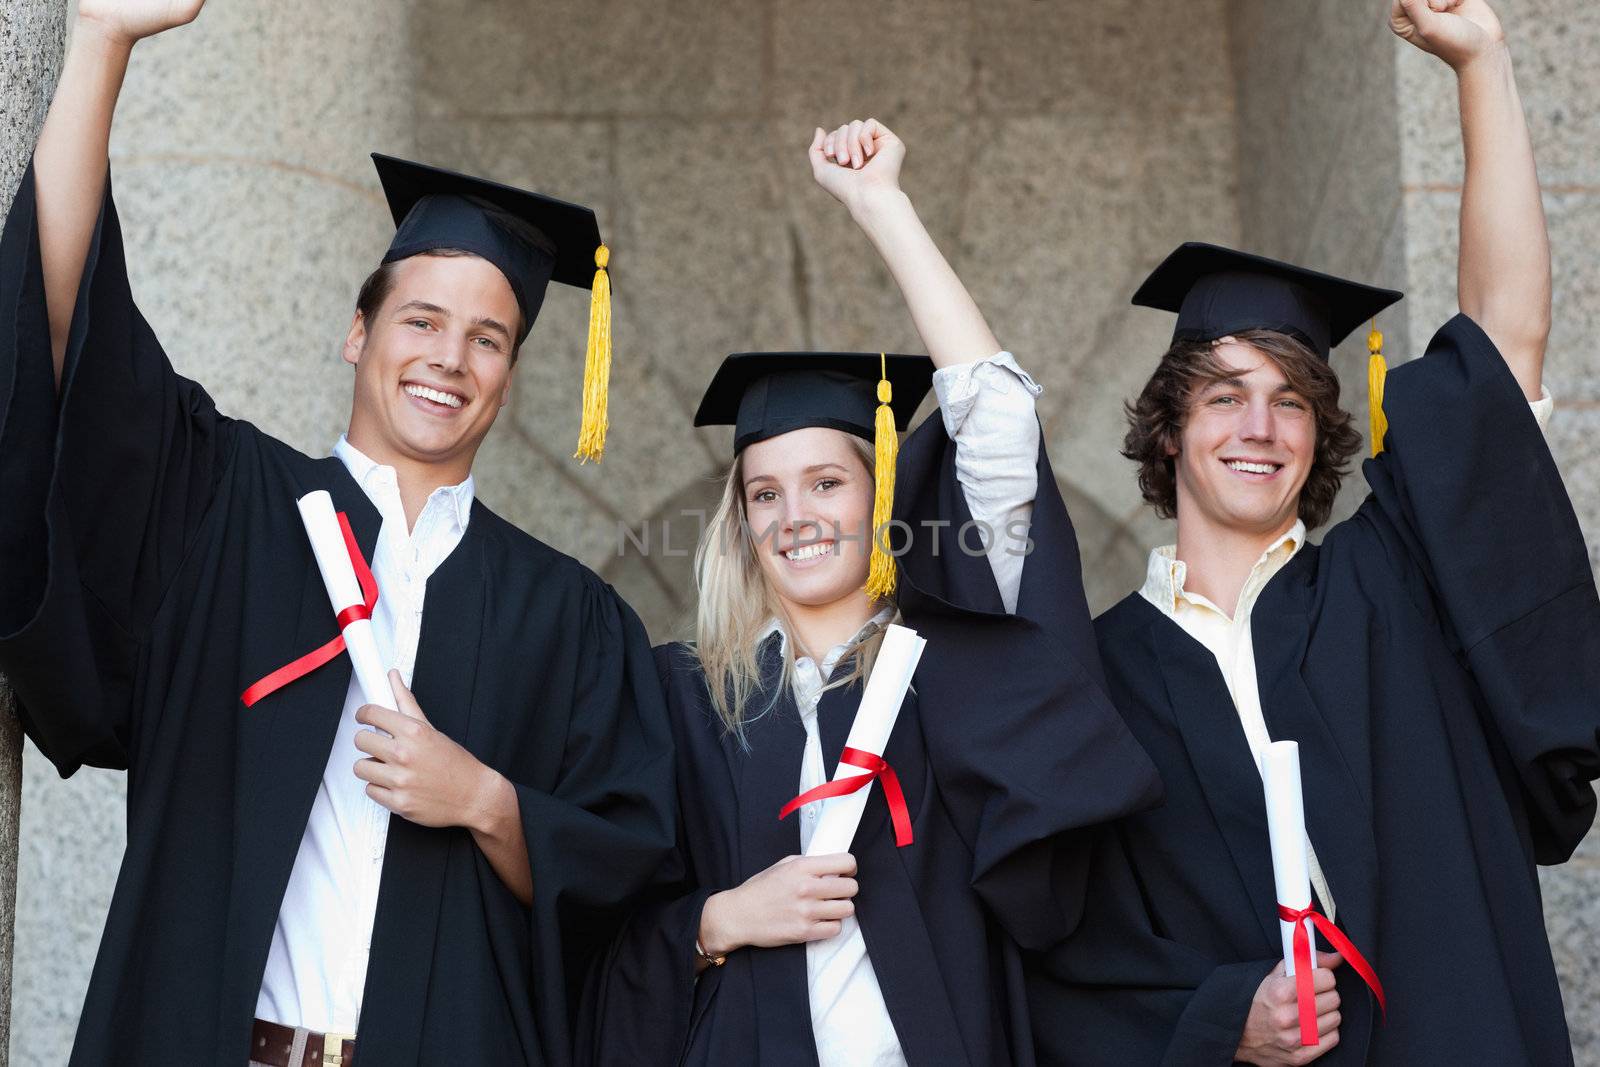 Graduates holding their diploma while raising arm by Wavebreakmedia